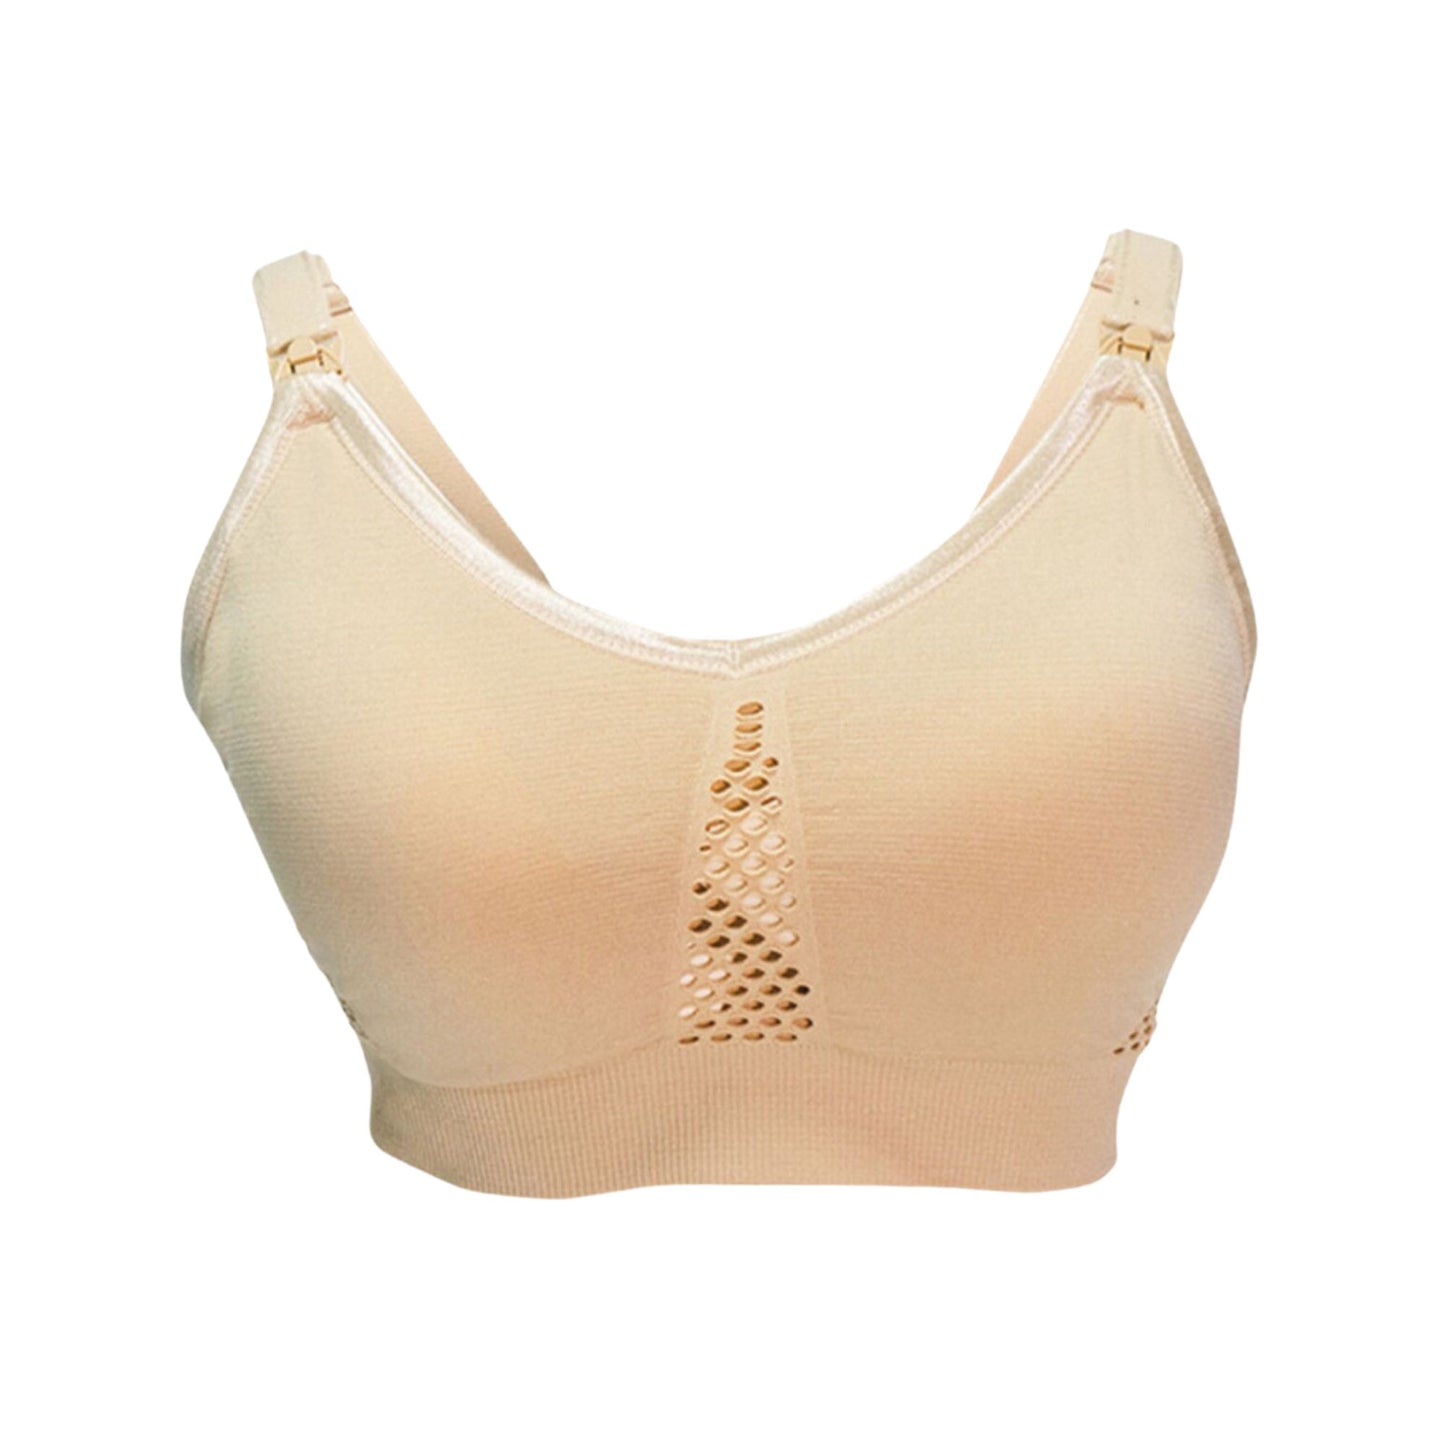 Adam & Eve 100% Pure Cotton Breathable Sports Nursing Breastfeeding Bra - Nude